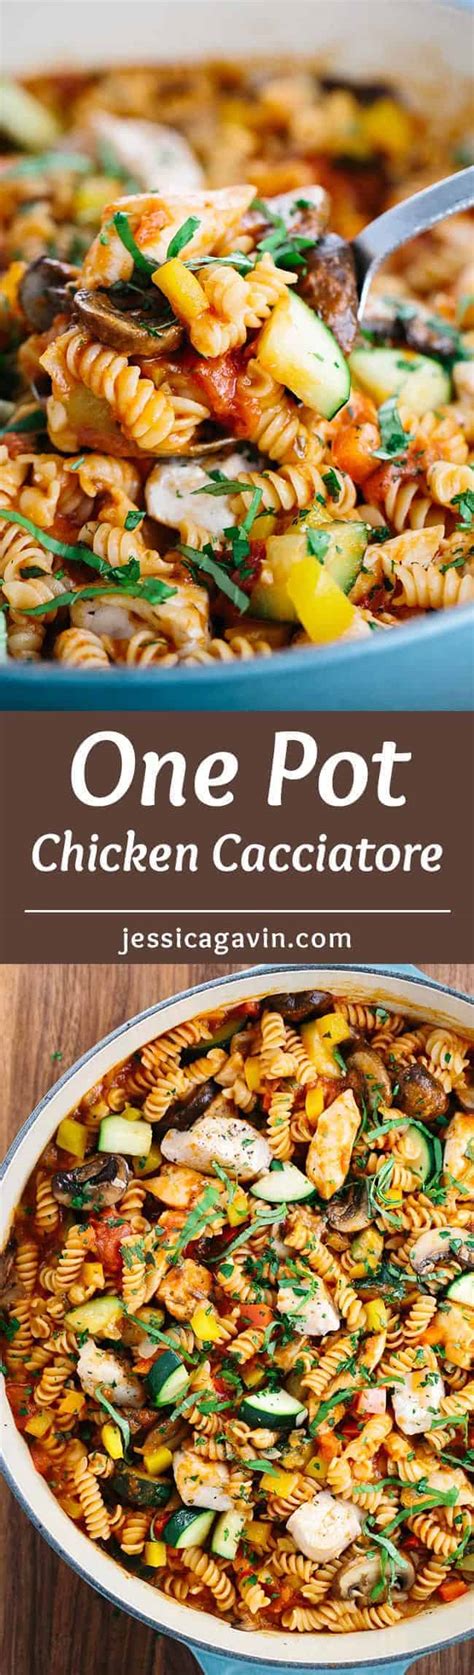 Easy One Pot Chicken Cacciatore Recipe With Veggies